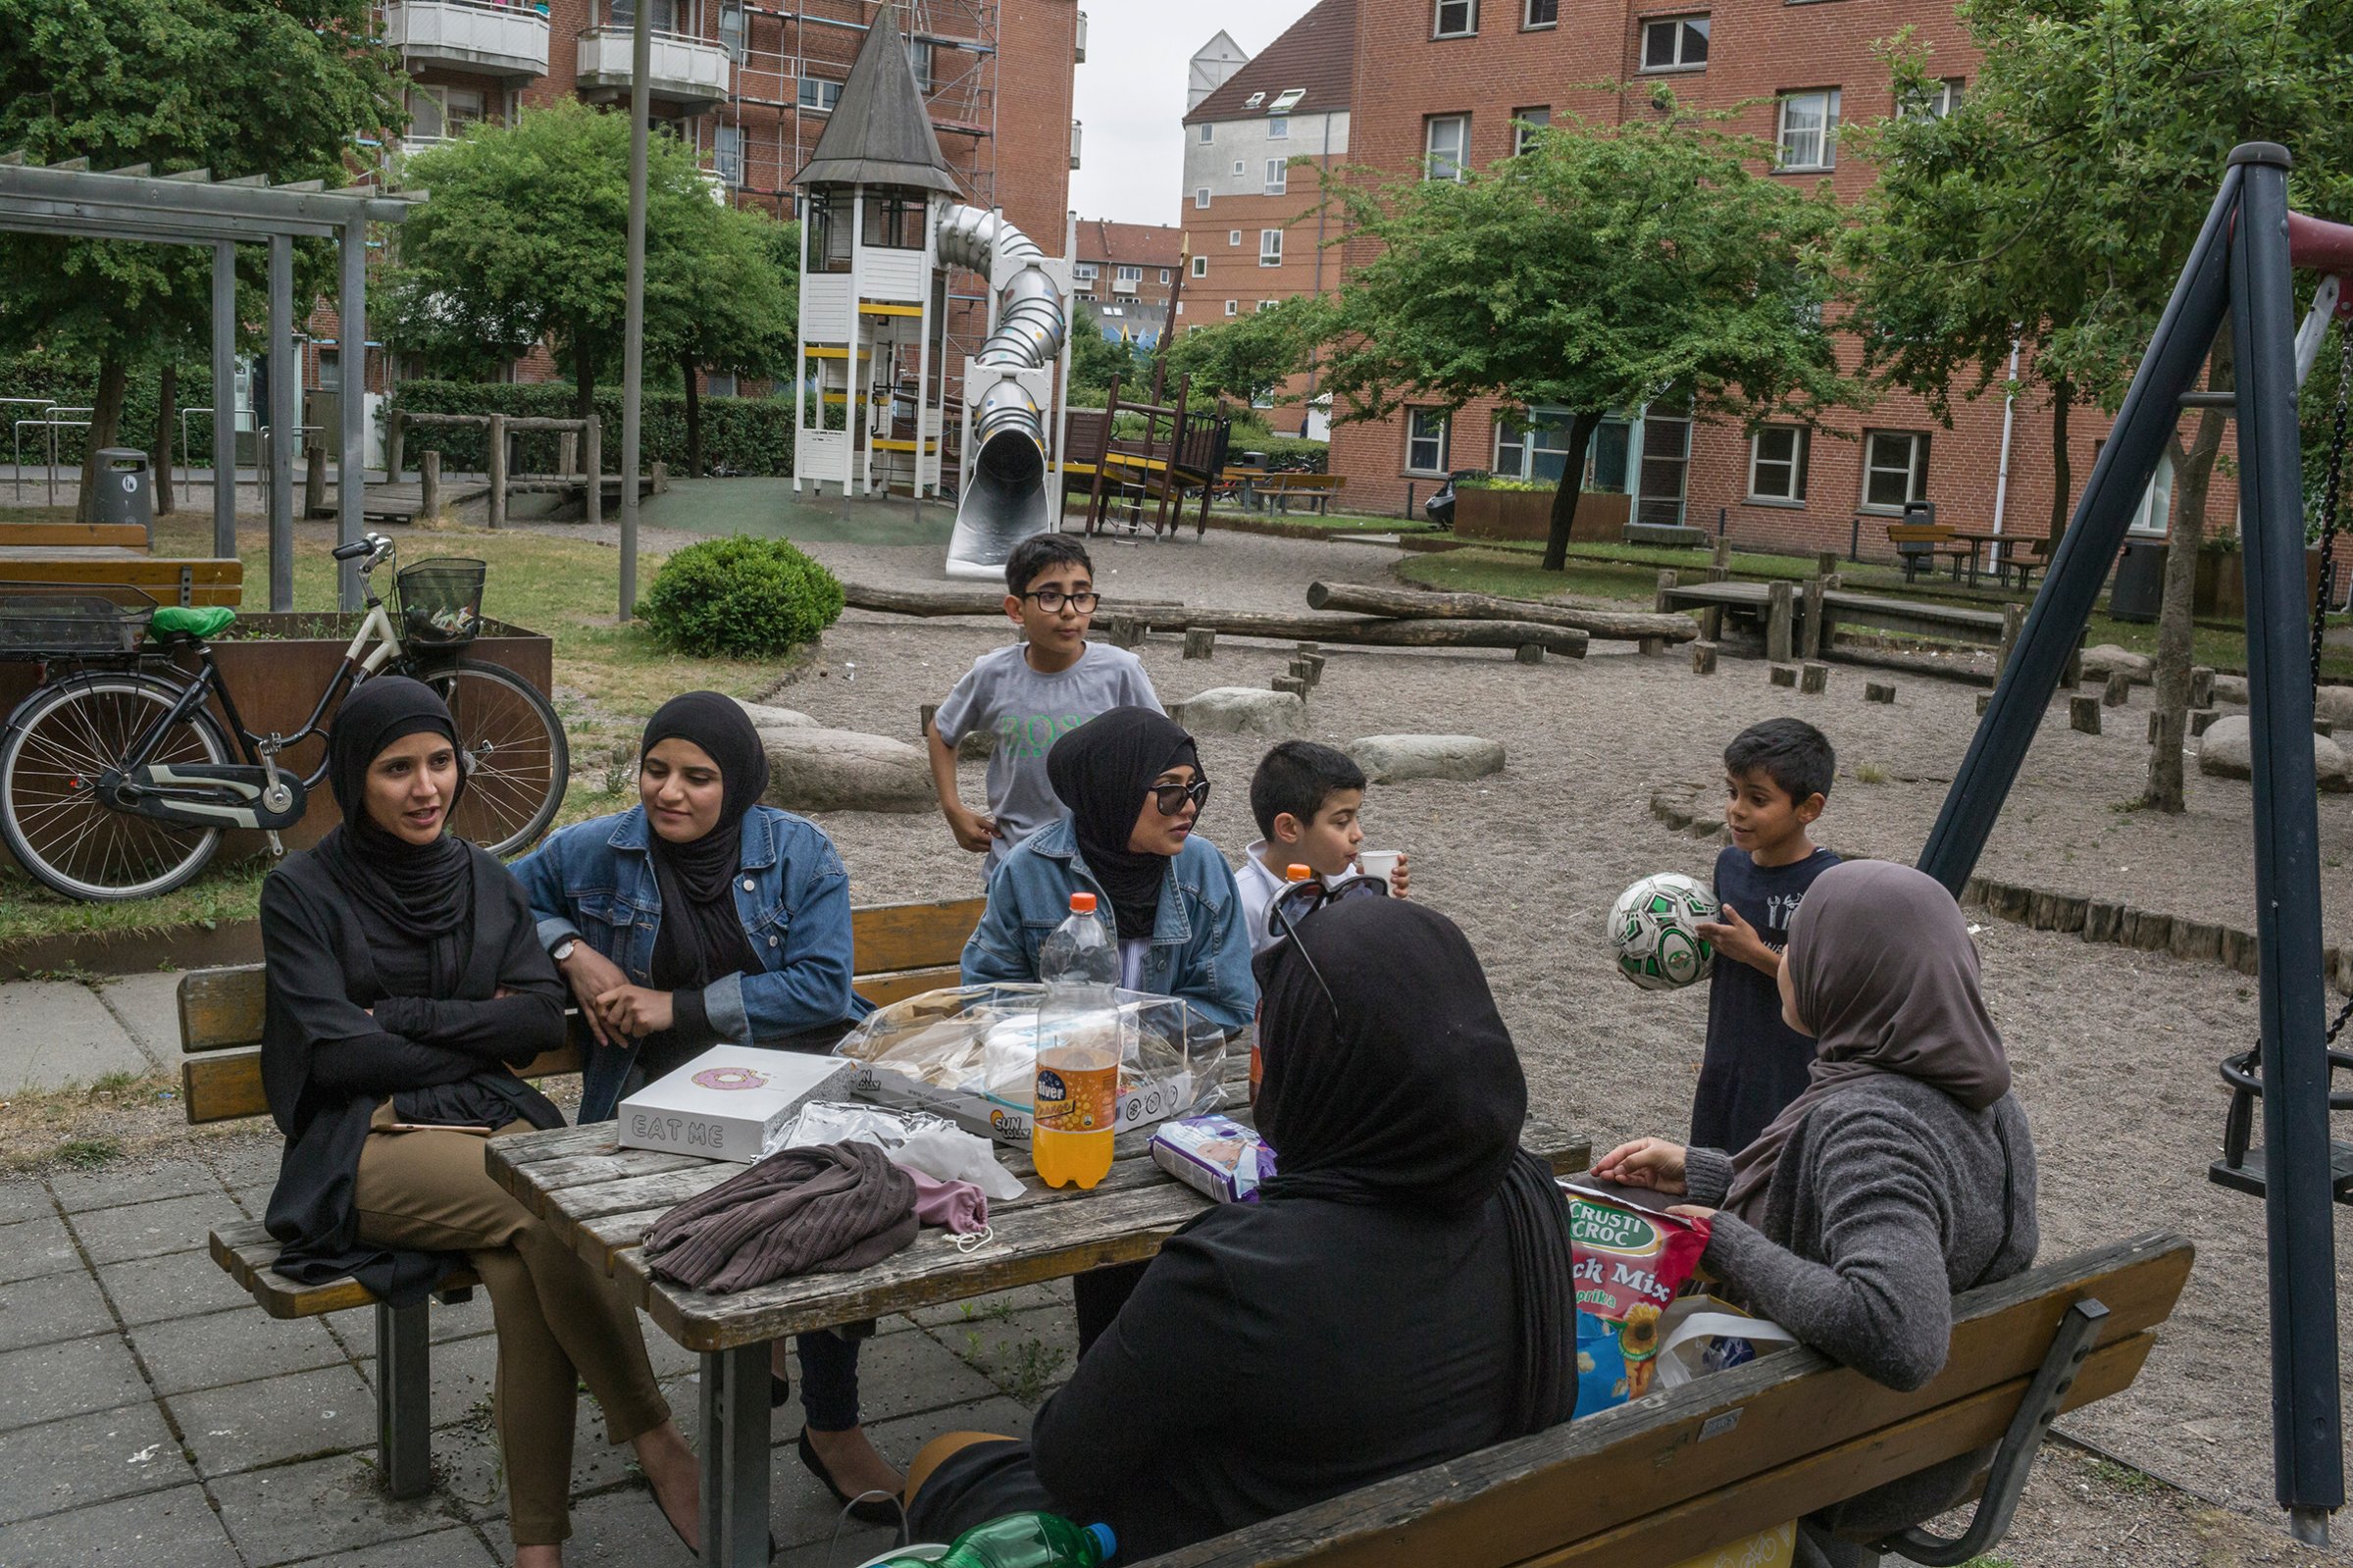 The Mjolnerparken housing project in Copenhagen is classified as a “ghetto.”